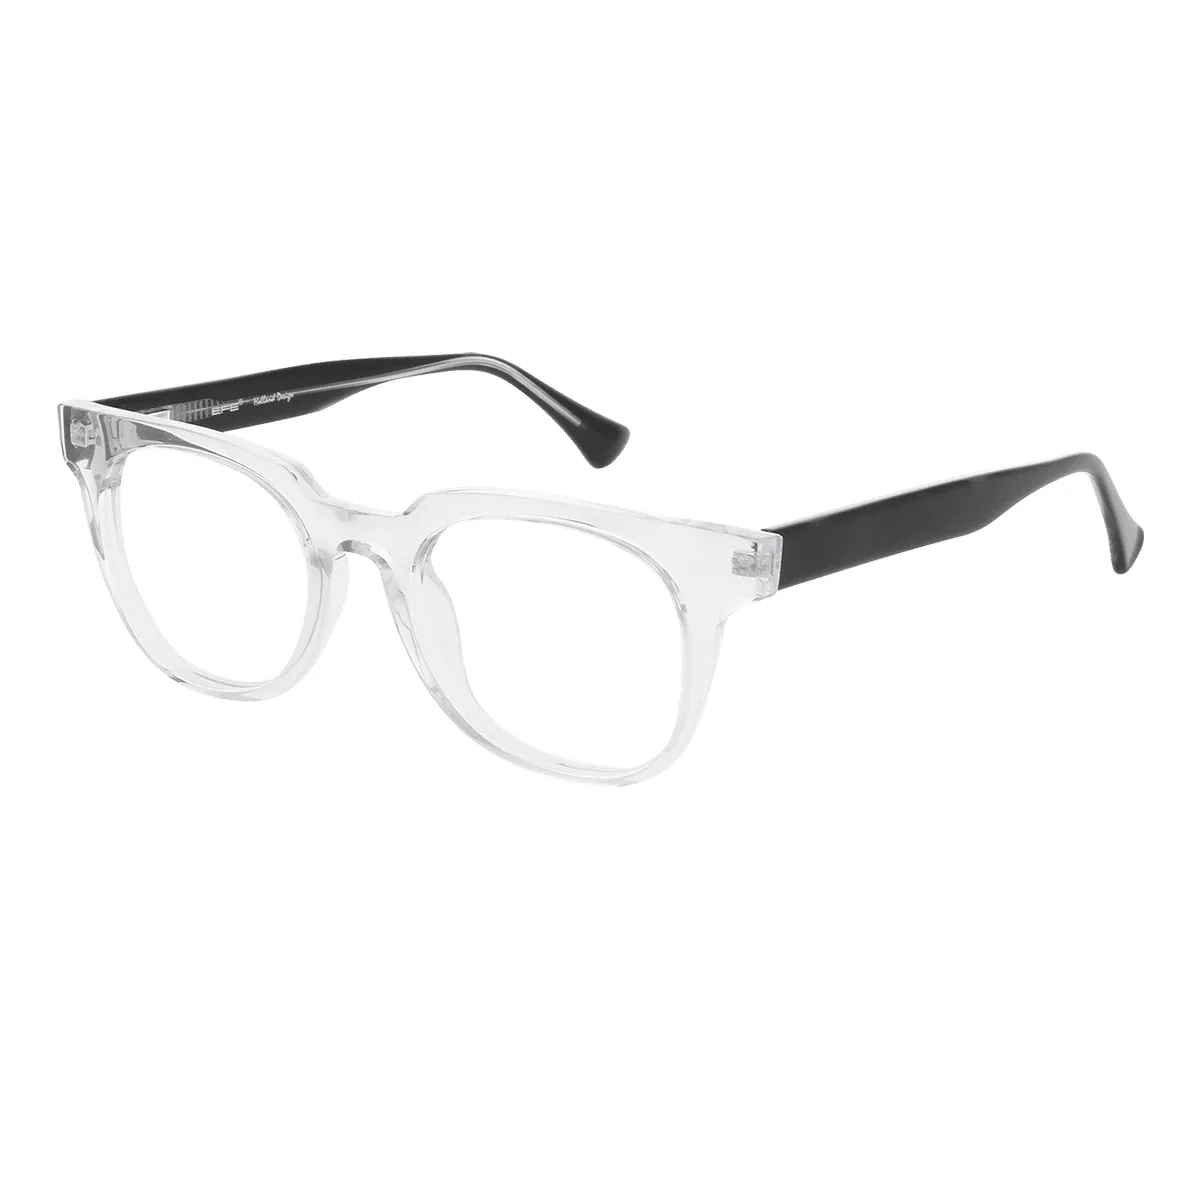 Aymar - Square Translucent Glasses for Women - EFE